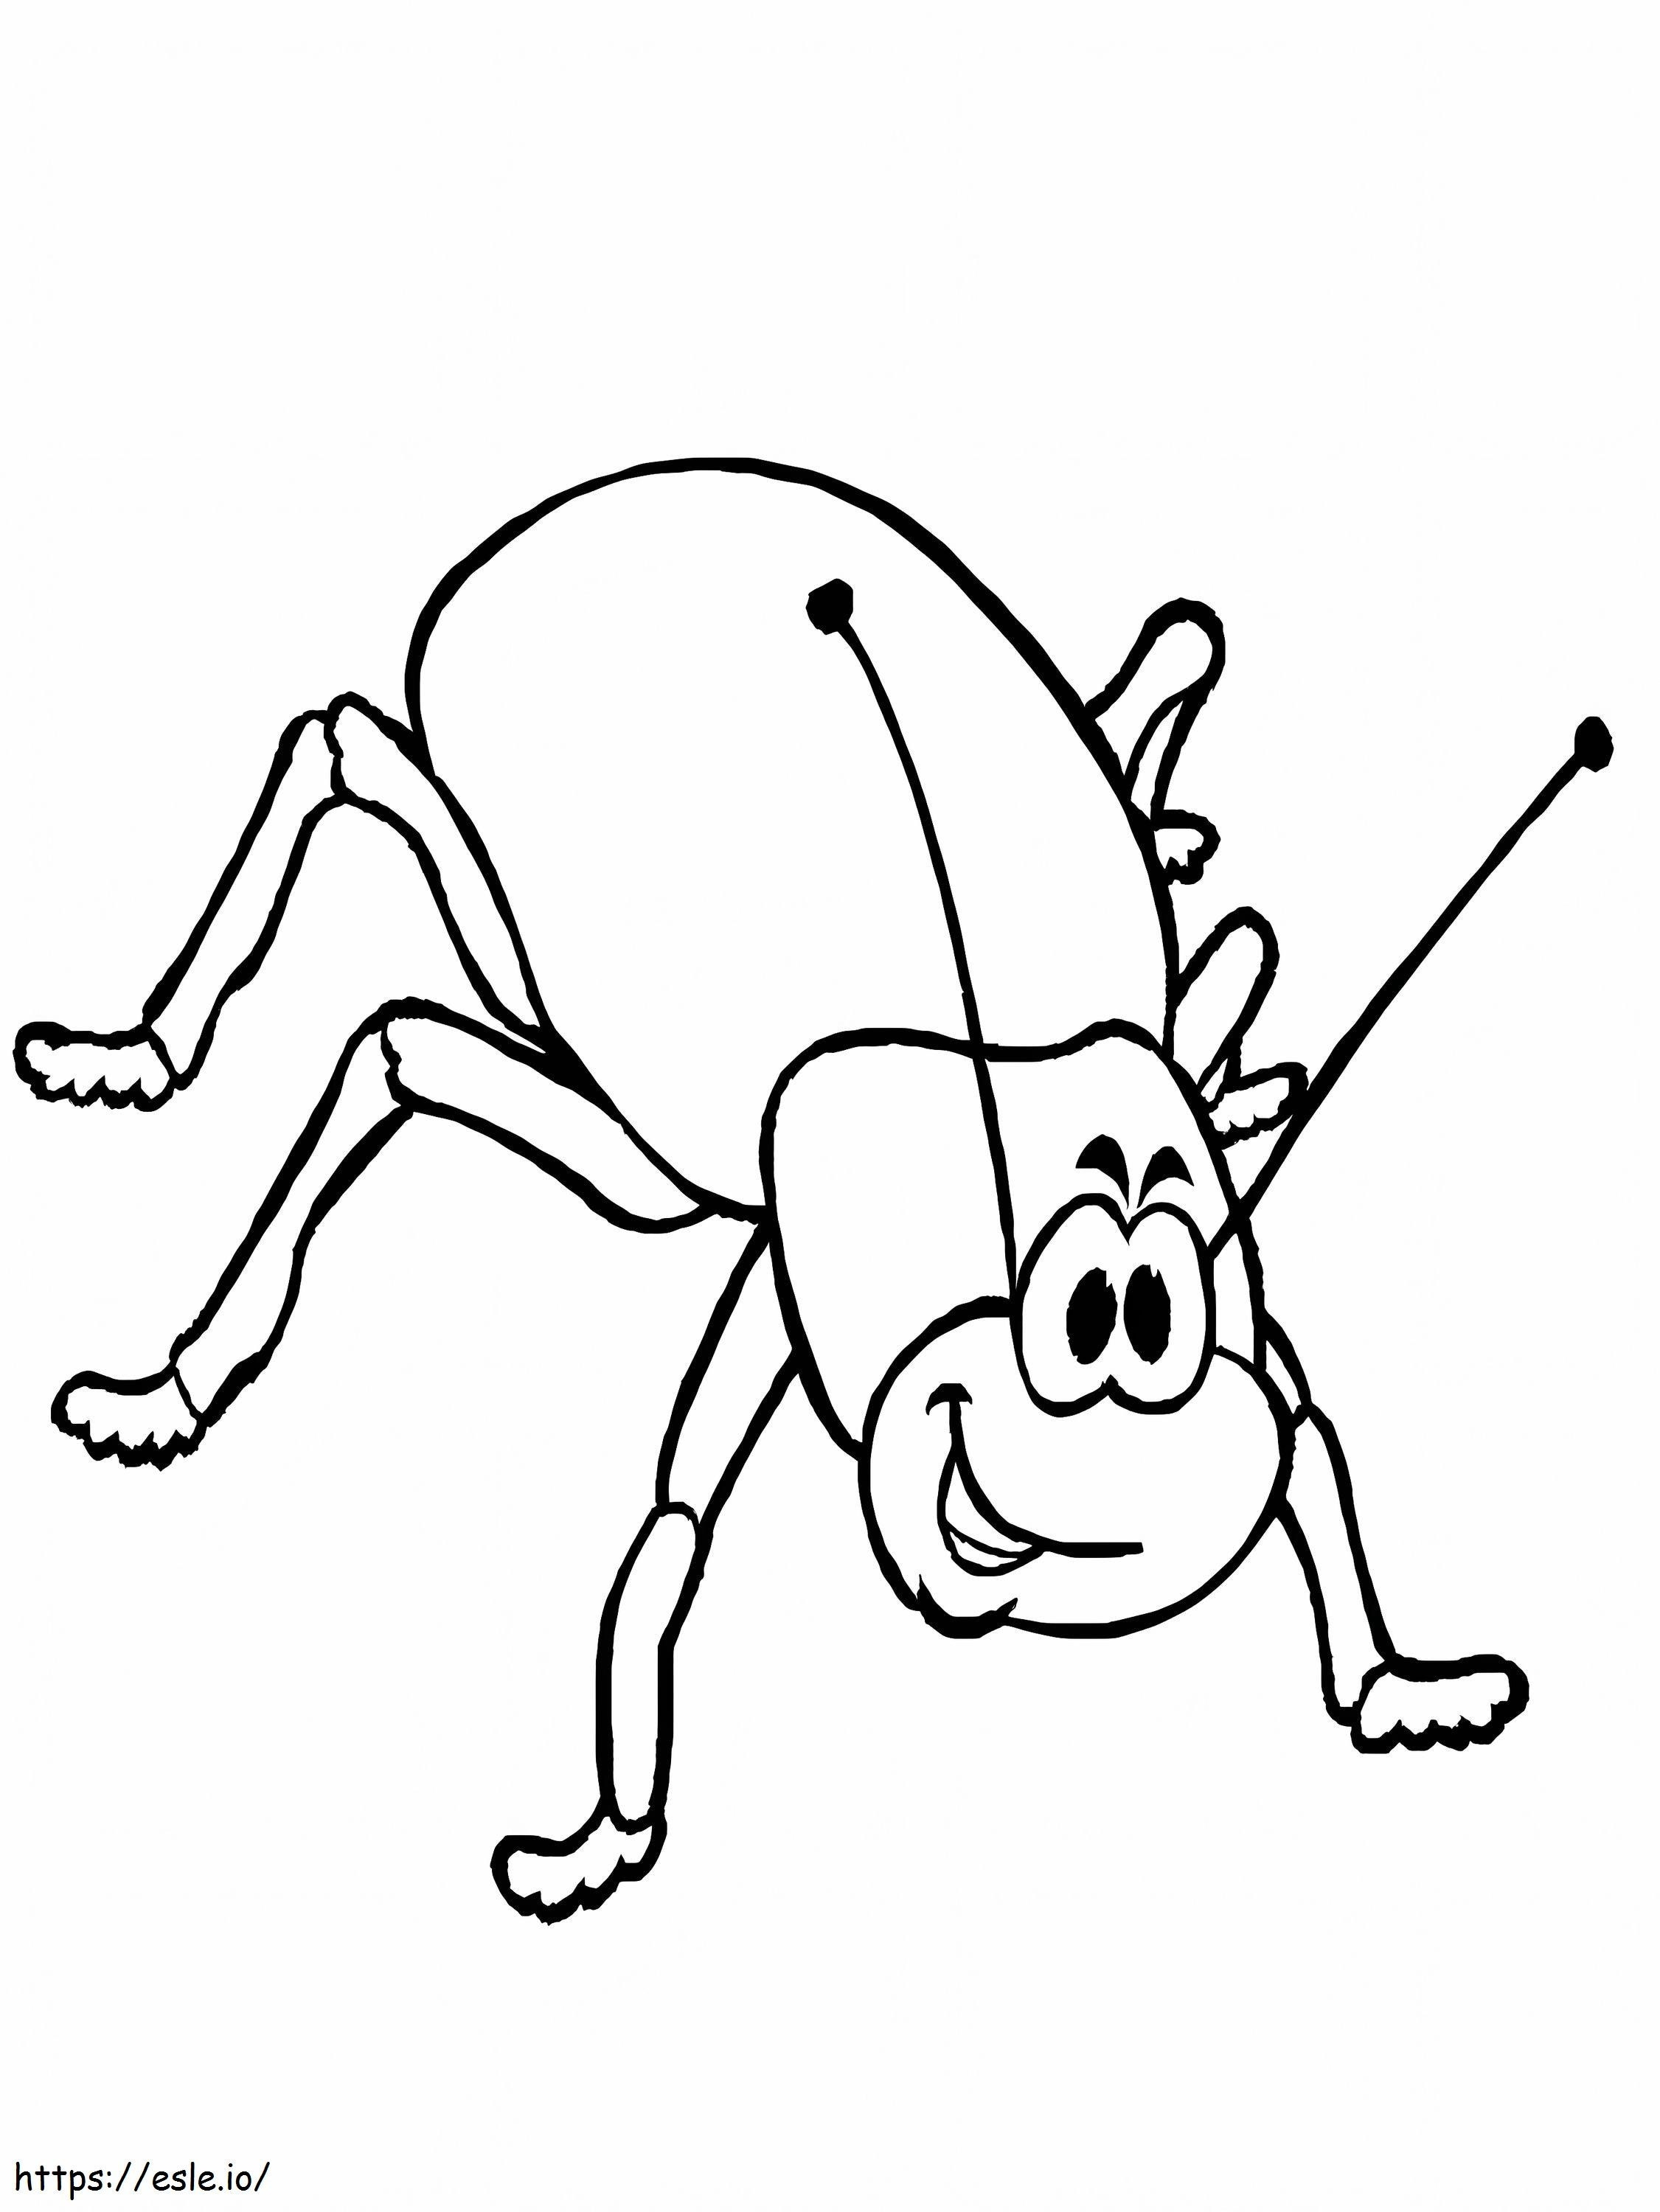 Cartoon Beetle coloring page